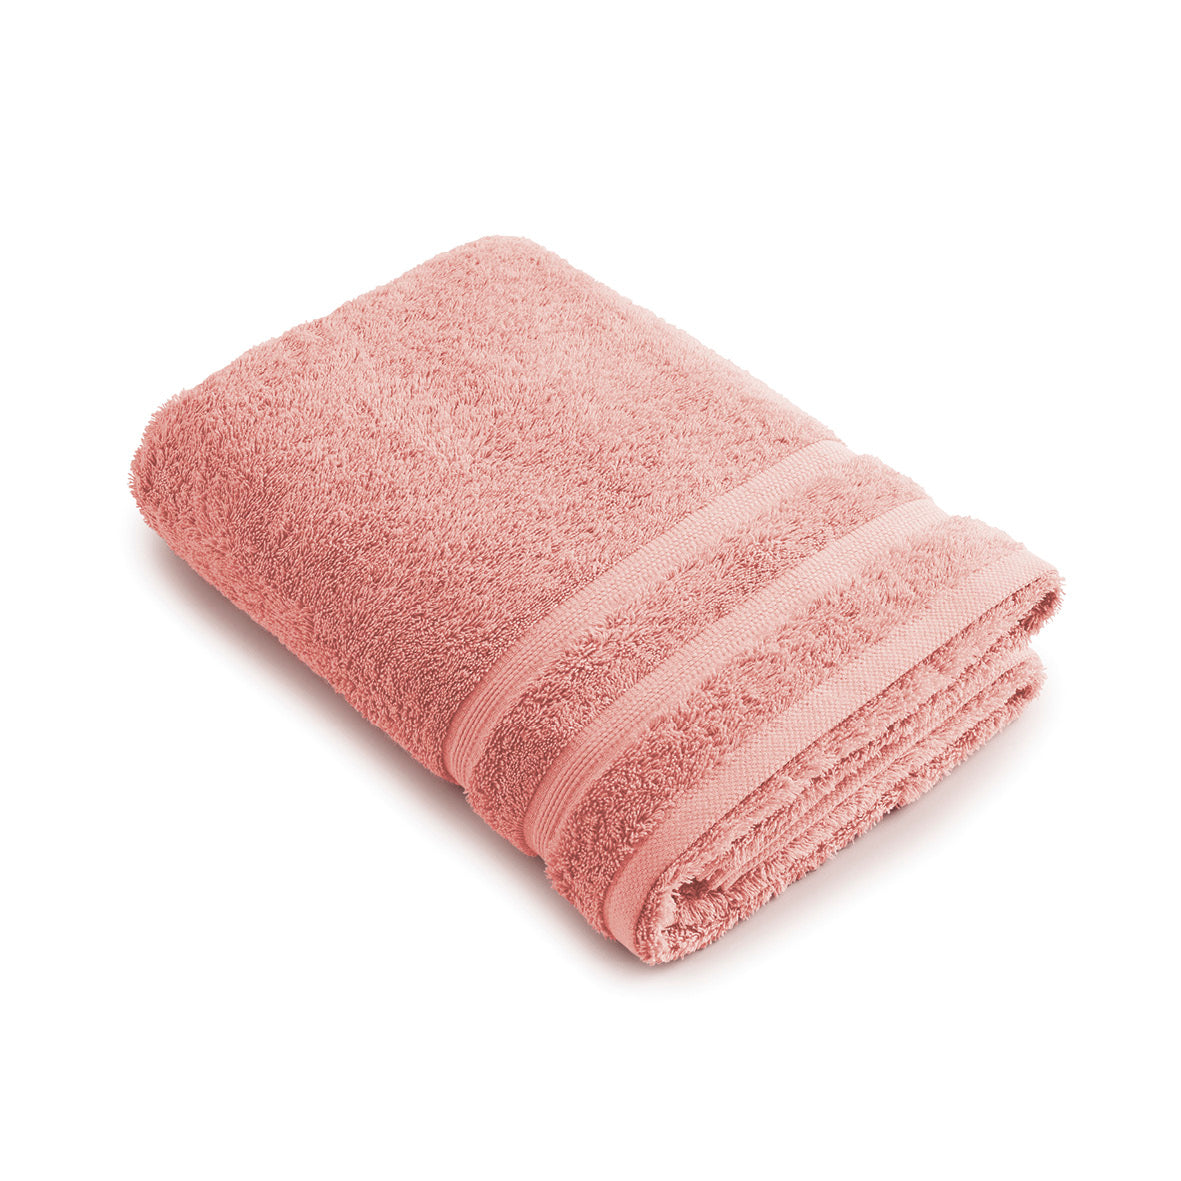 Maxi bathtowel - 100 x 150 cm Salmon pink